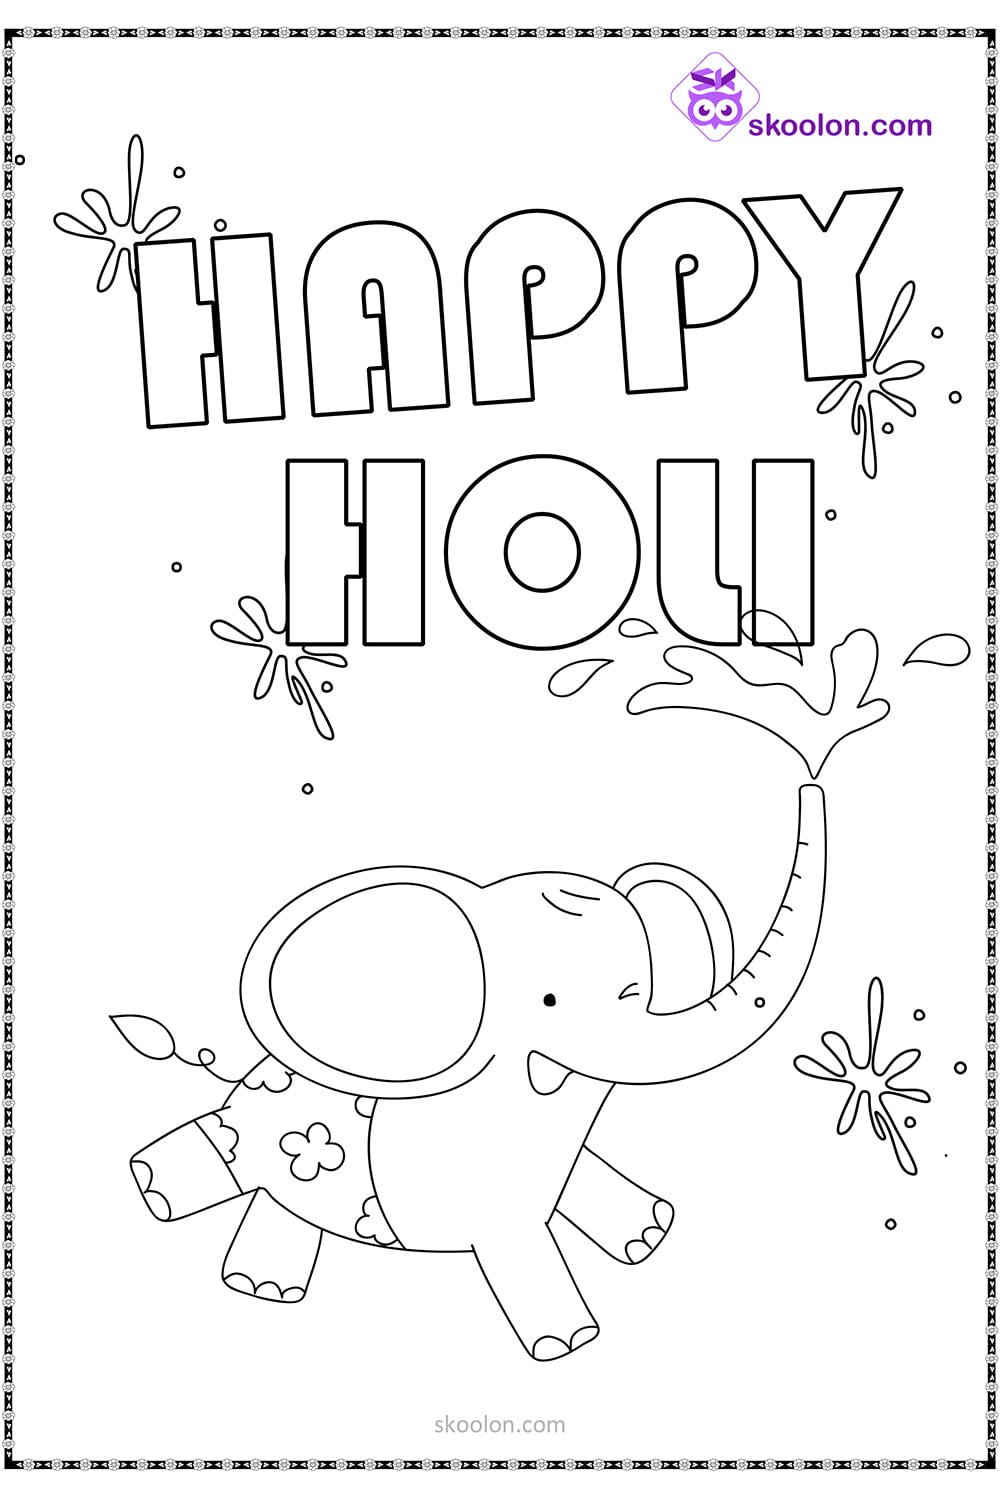 Holi - Baby elephant splashing colors - skoolon.com